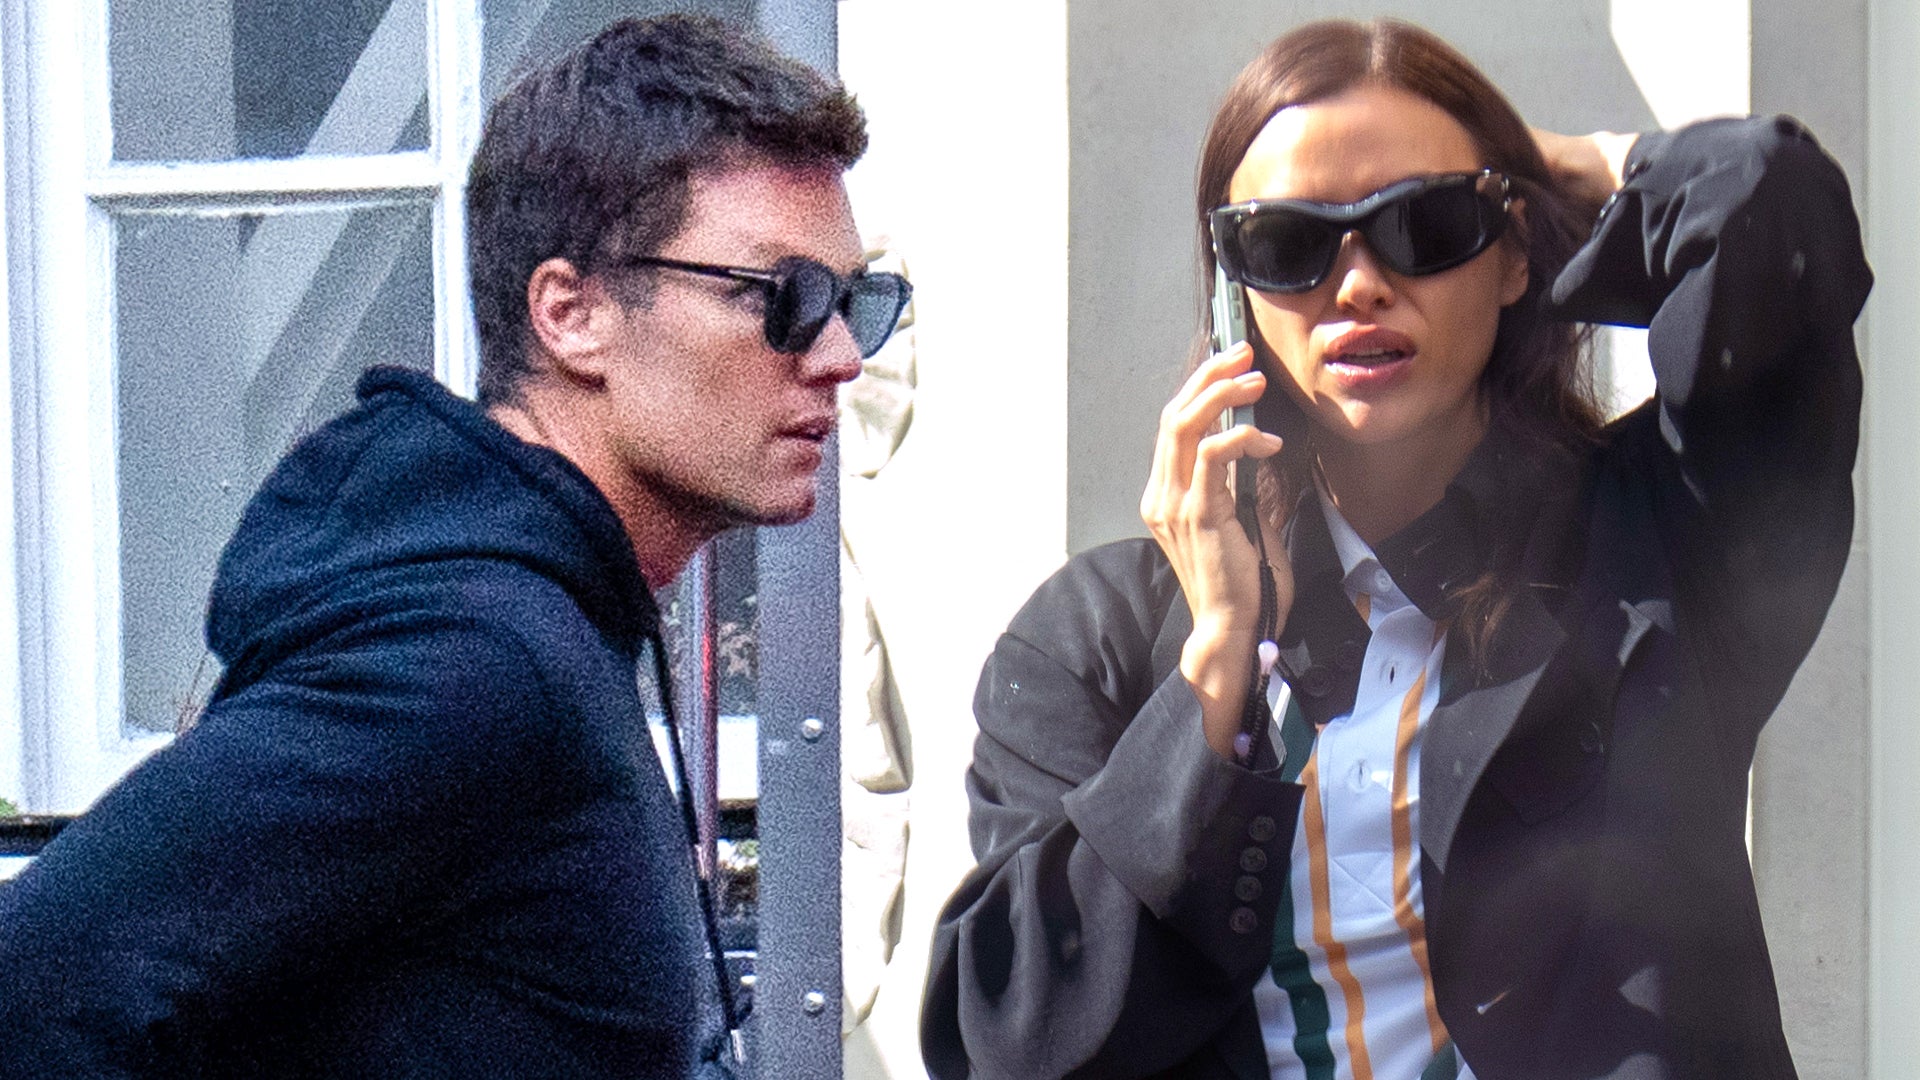 Tom Brady, Irina Shayk Don't Like 'Being Apart' Amid New Romance